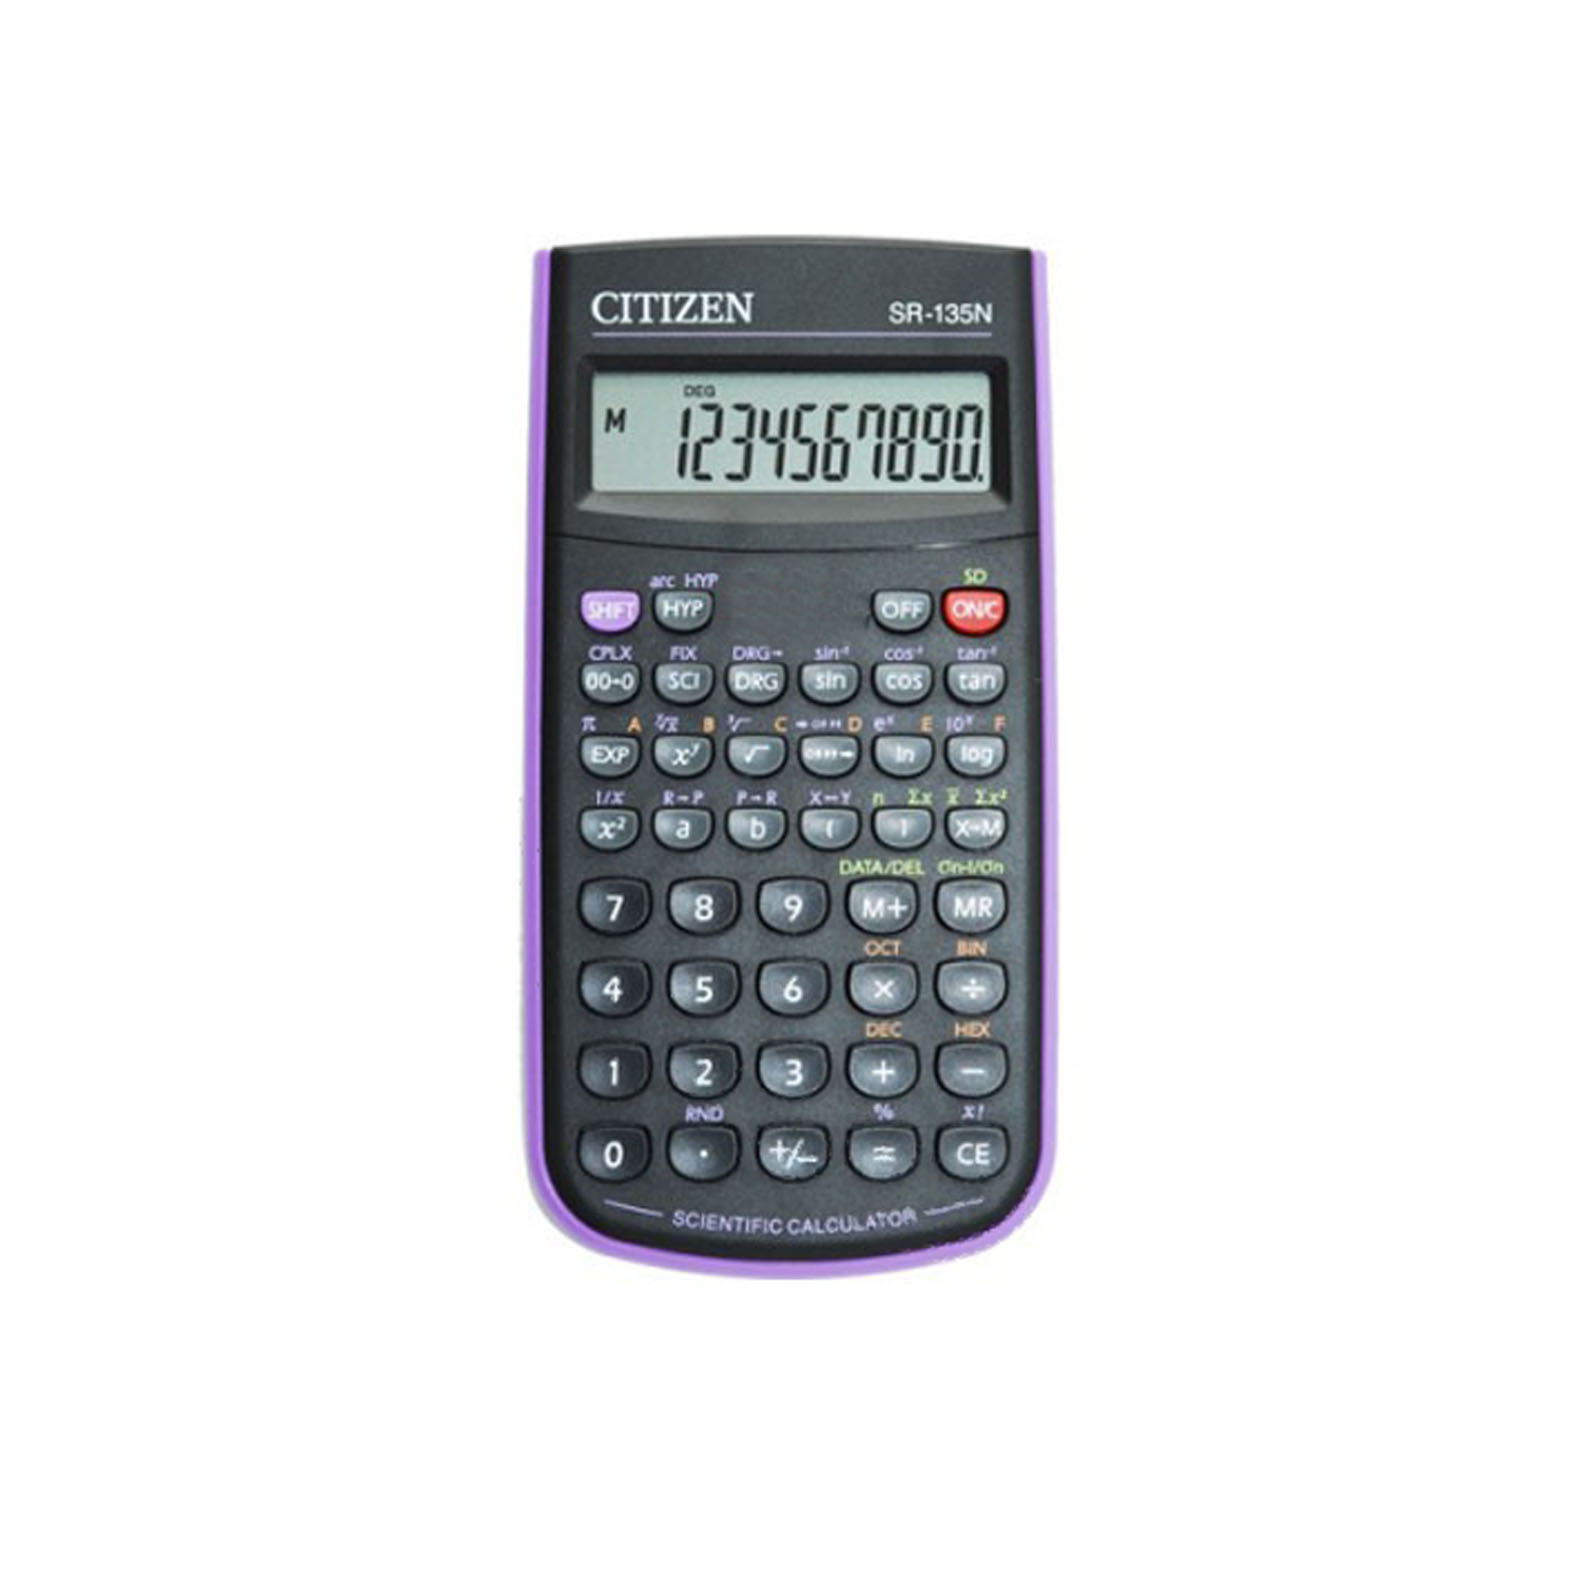 calculator citizen SR-135NPU 1 | لایف رایان زنجان